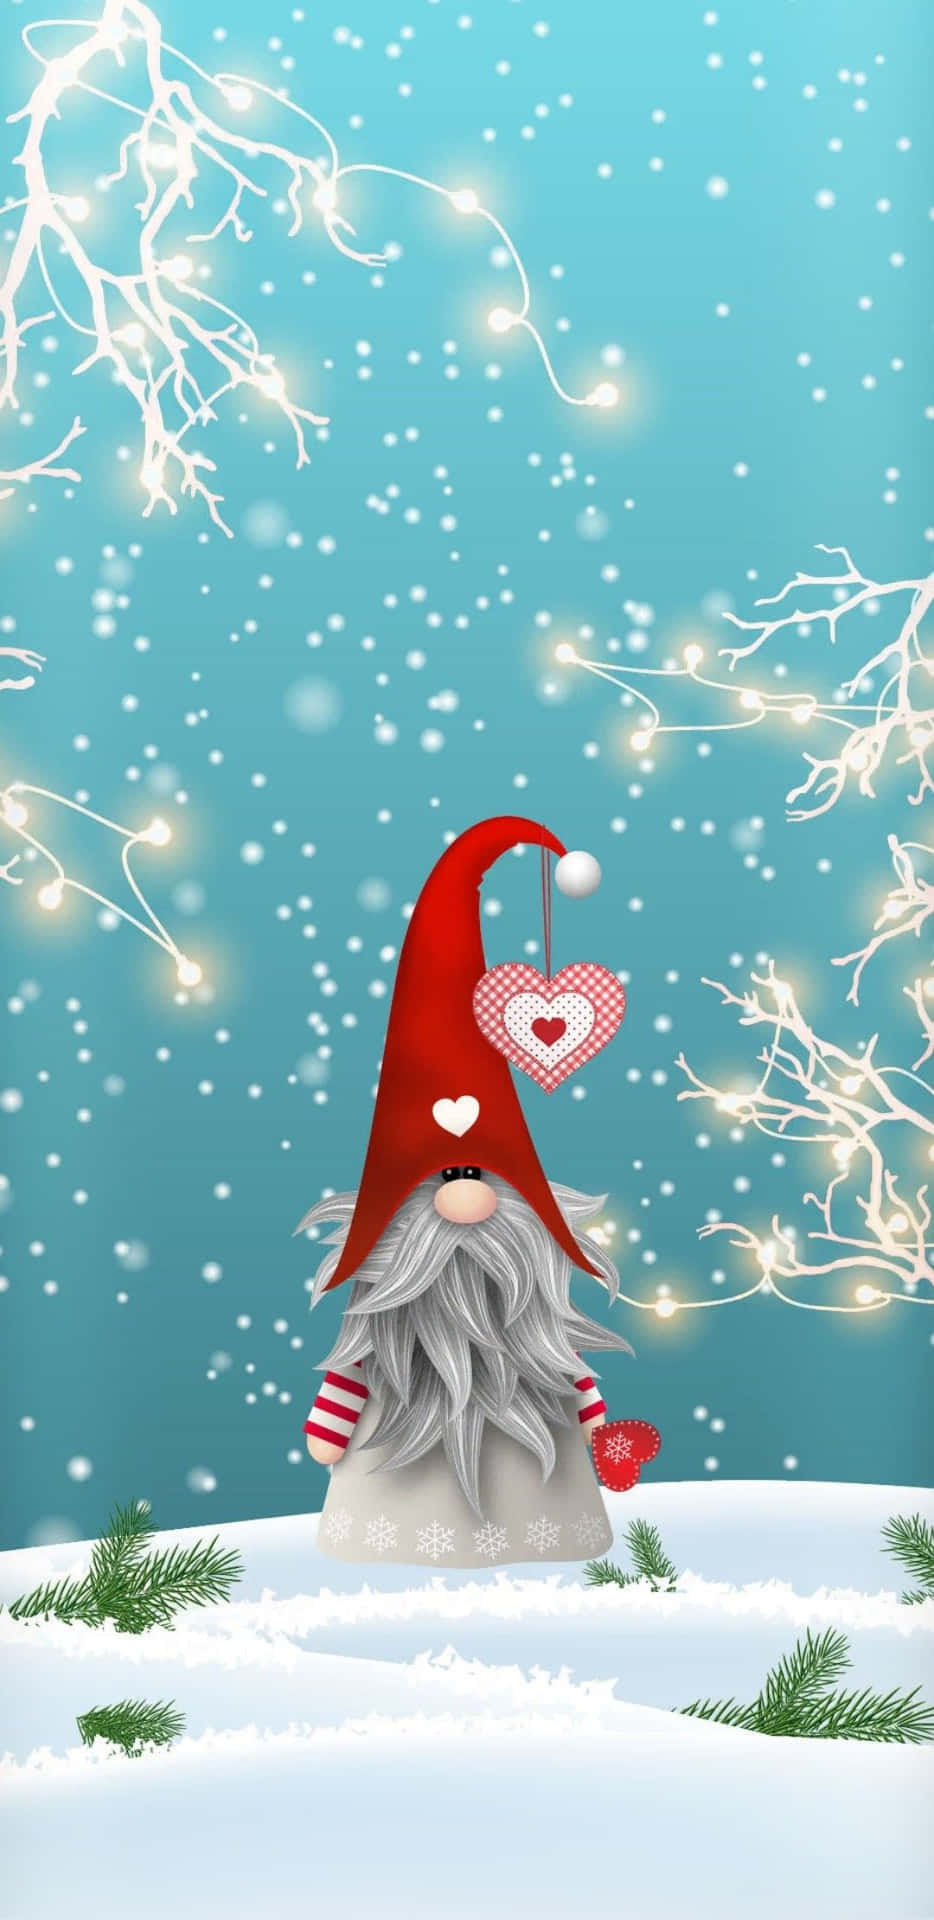 Winter Gnome With Heart Ornament Wallpaper